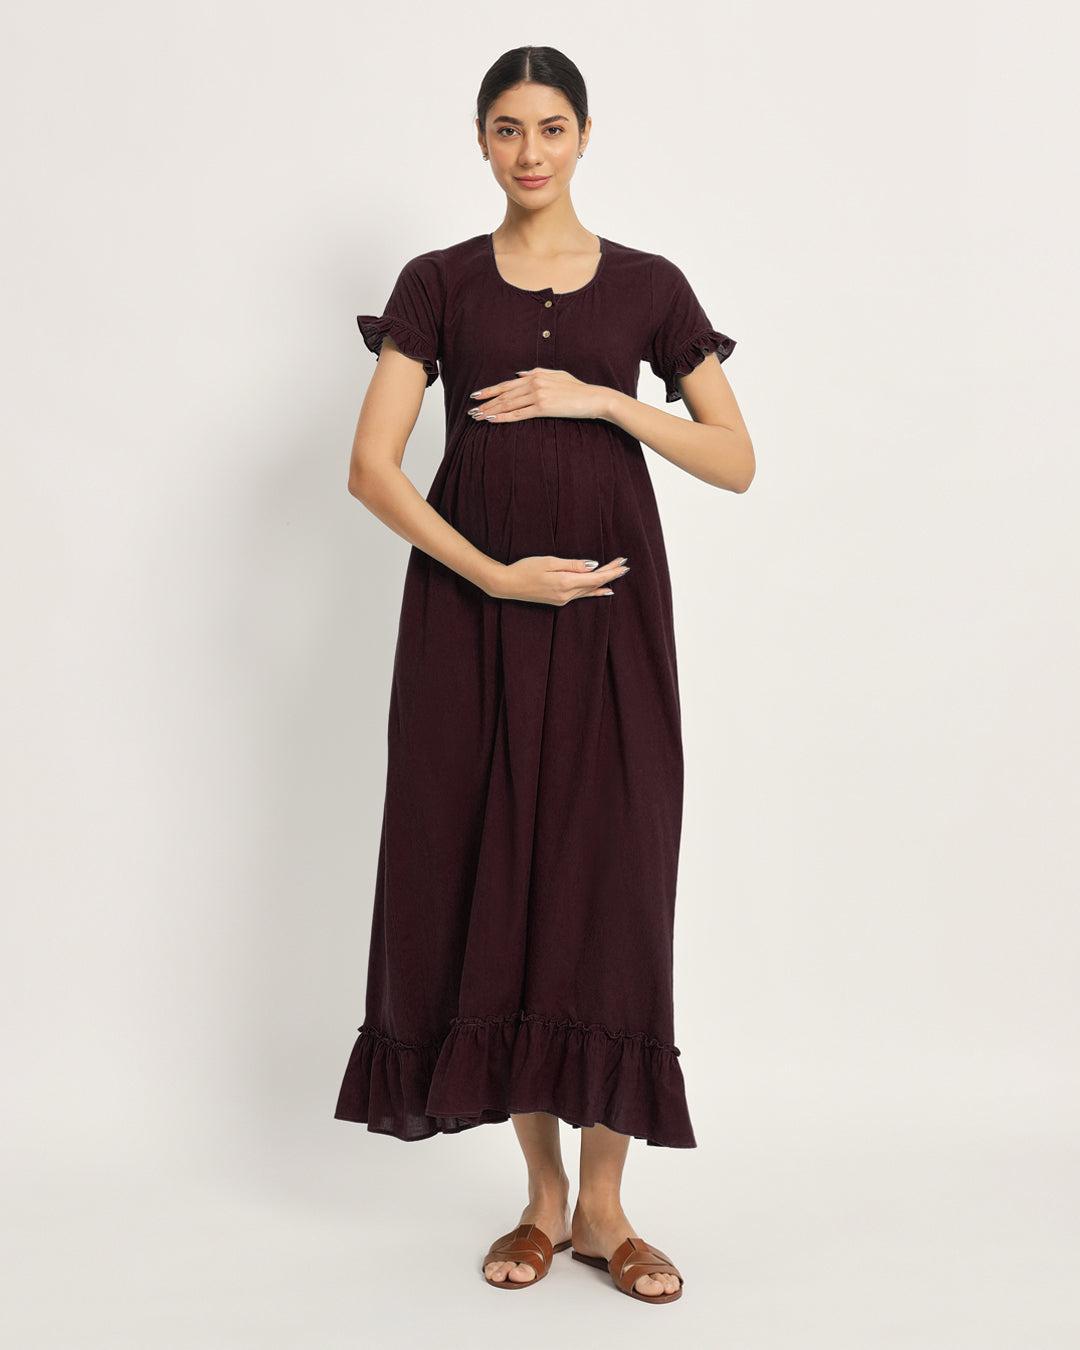 Plum Passion Bumpin' & Stylin' Maternity & Nursing Dress